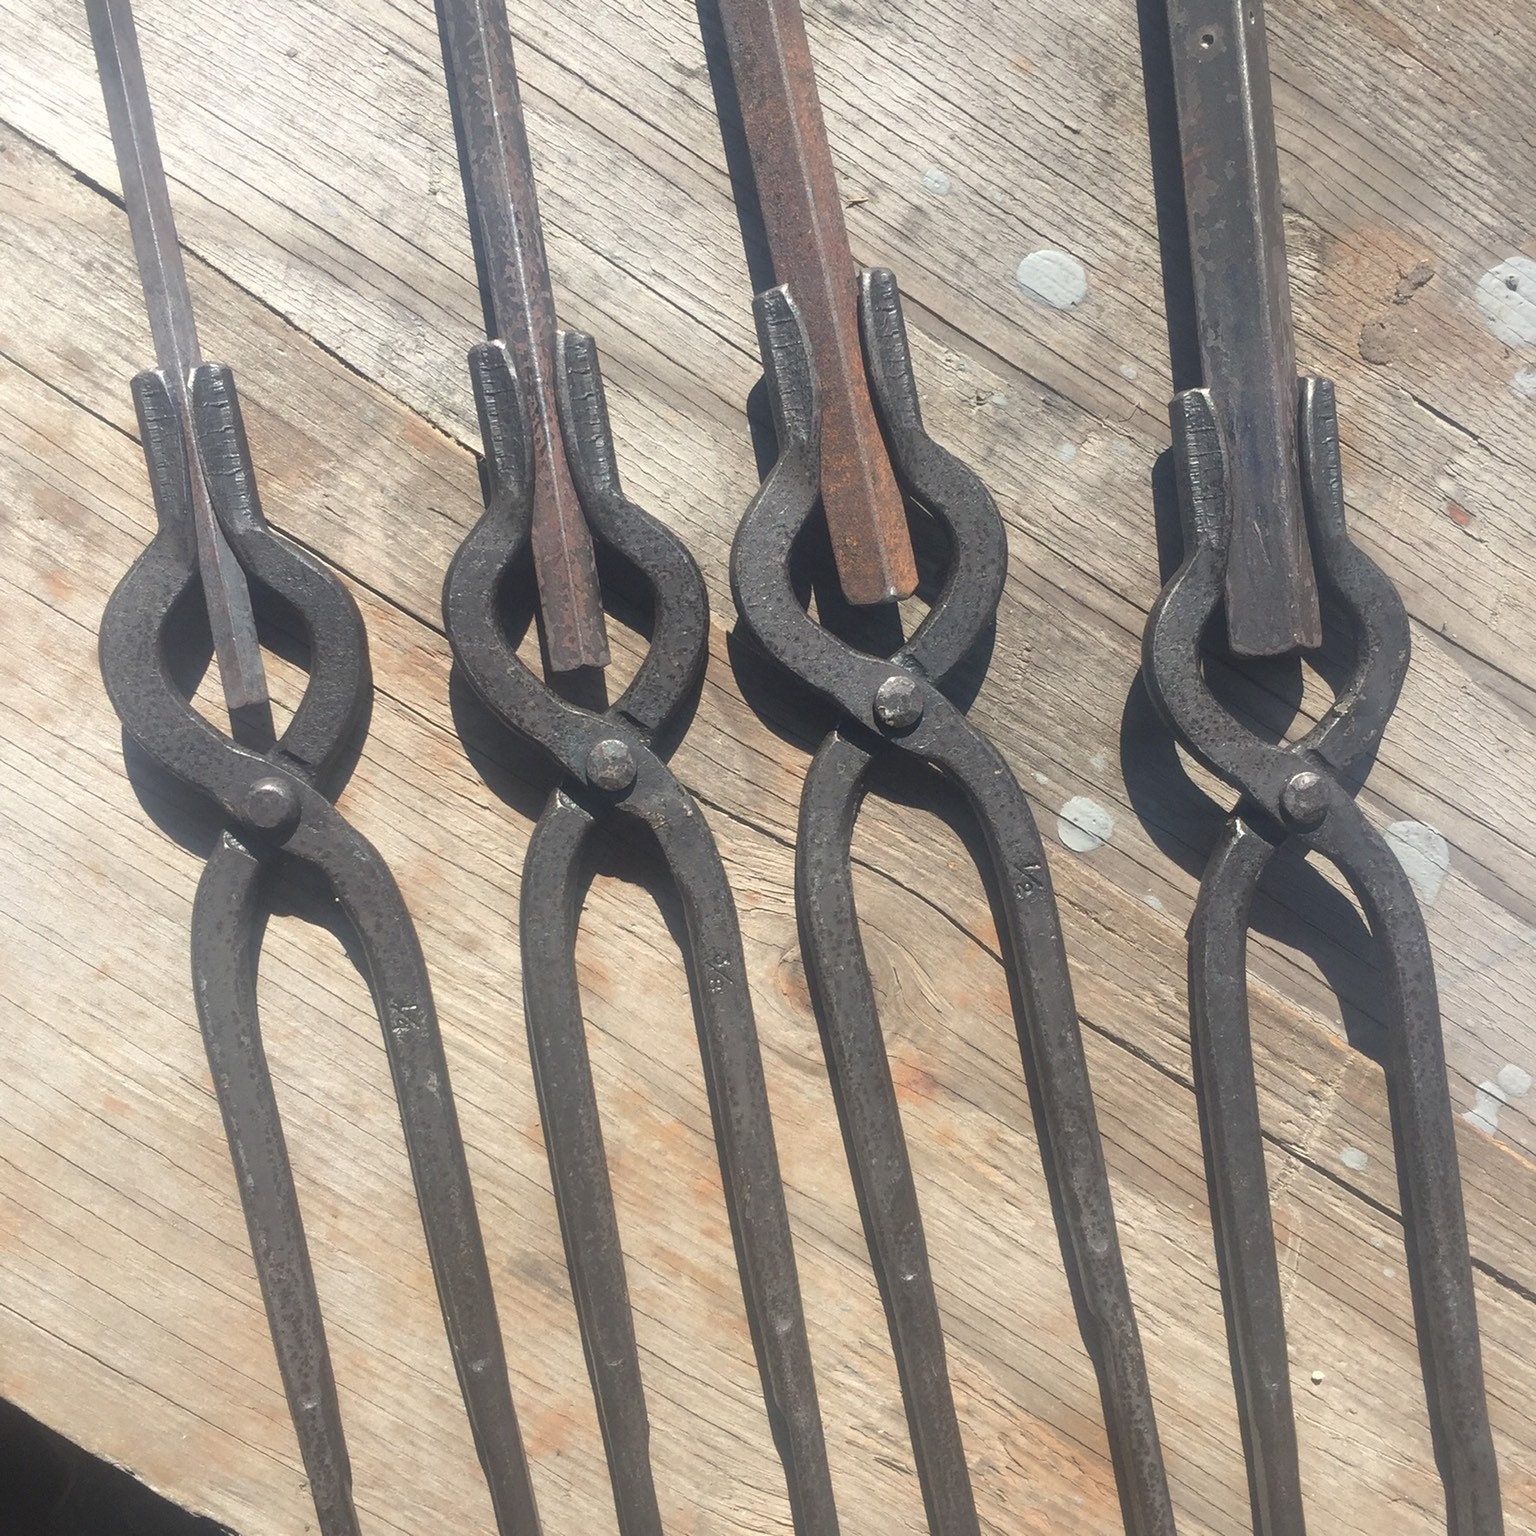 Beginner blacksmith tong set – QuickandDirtyTools